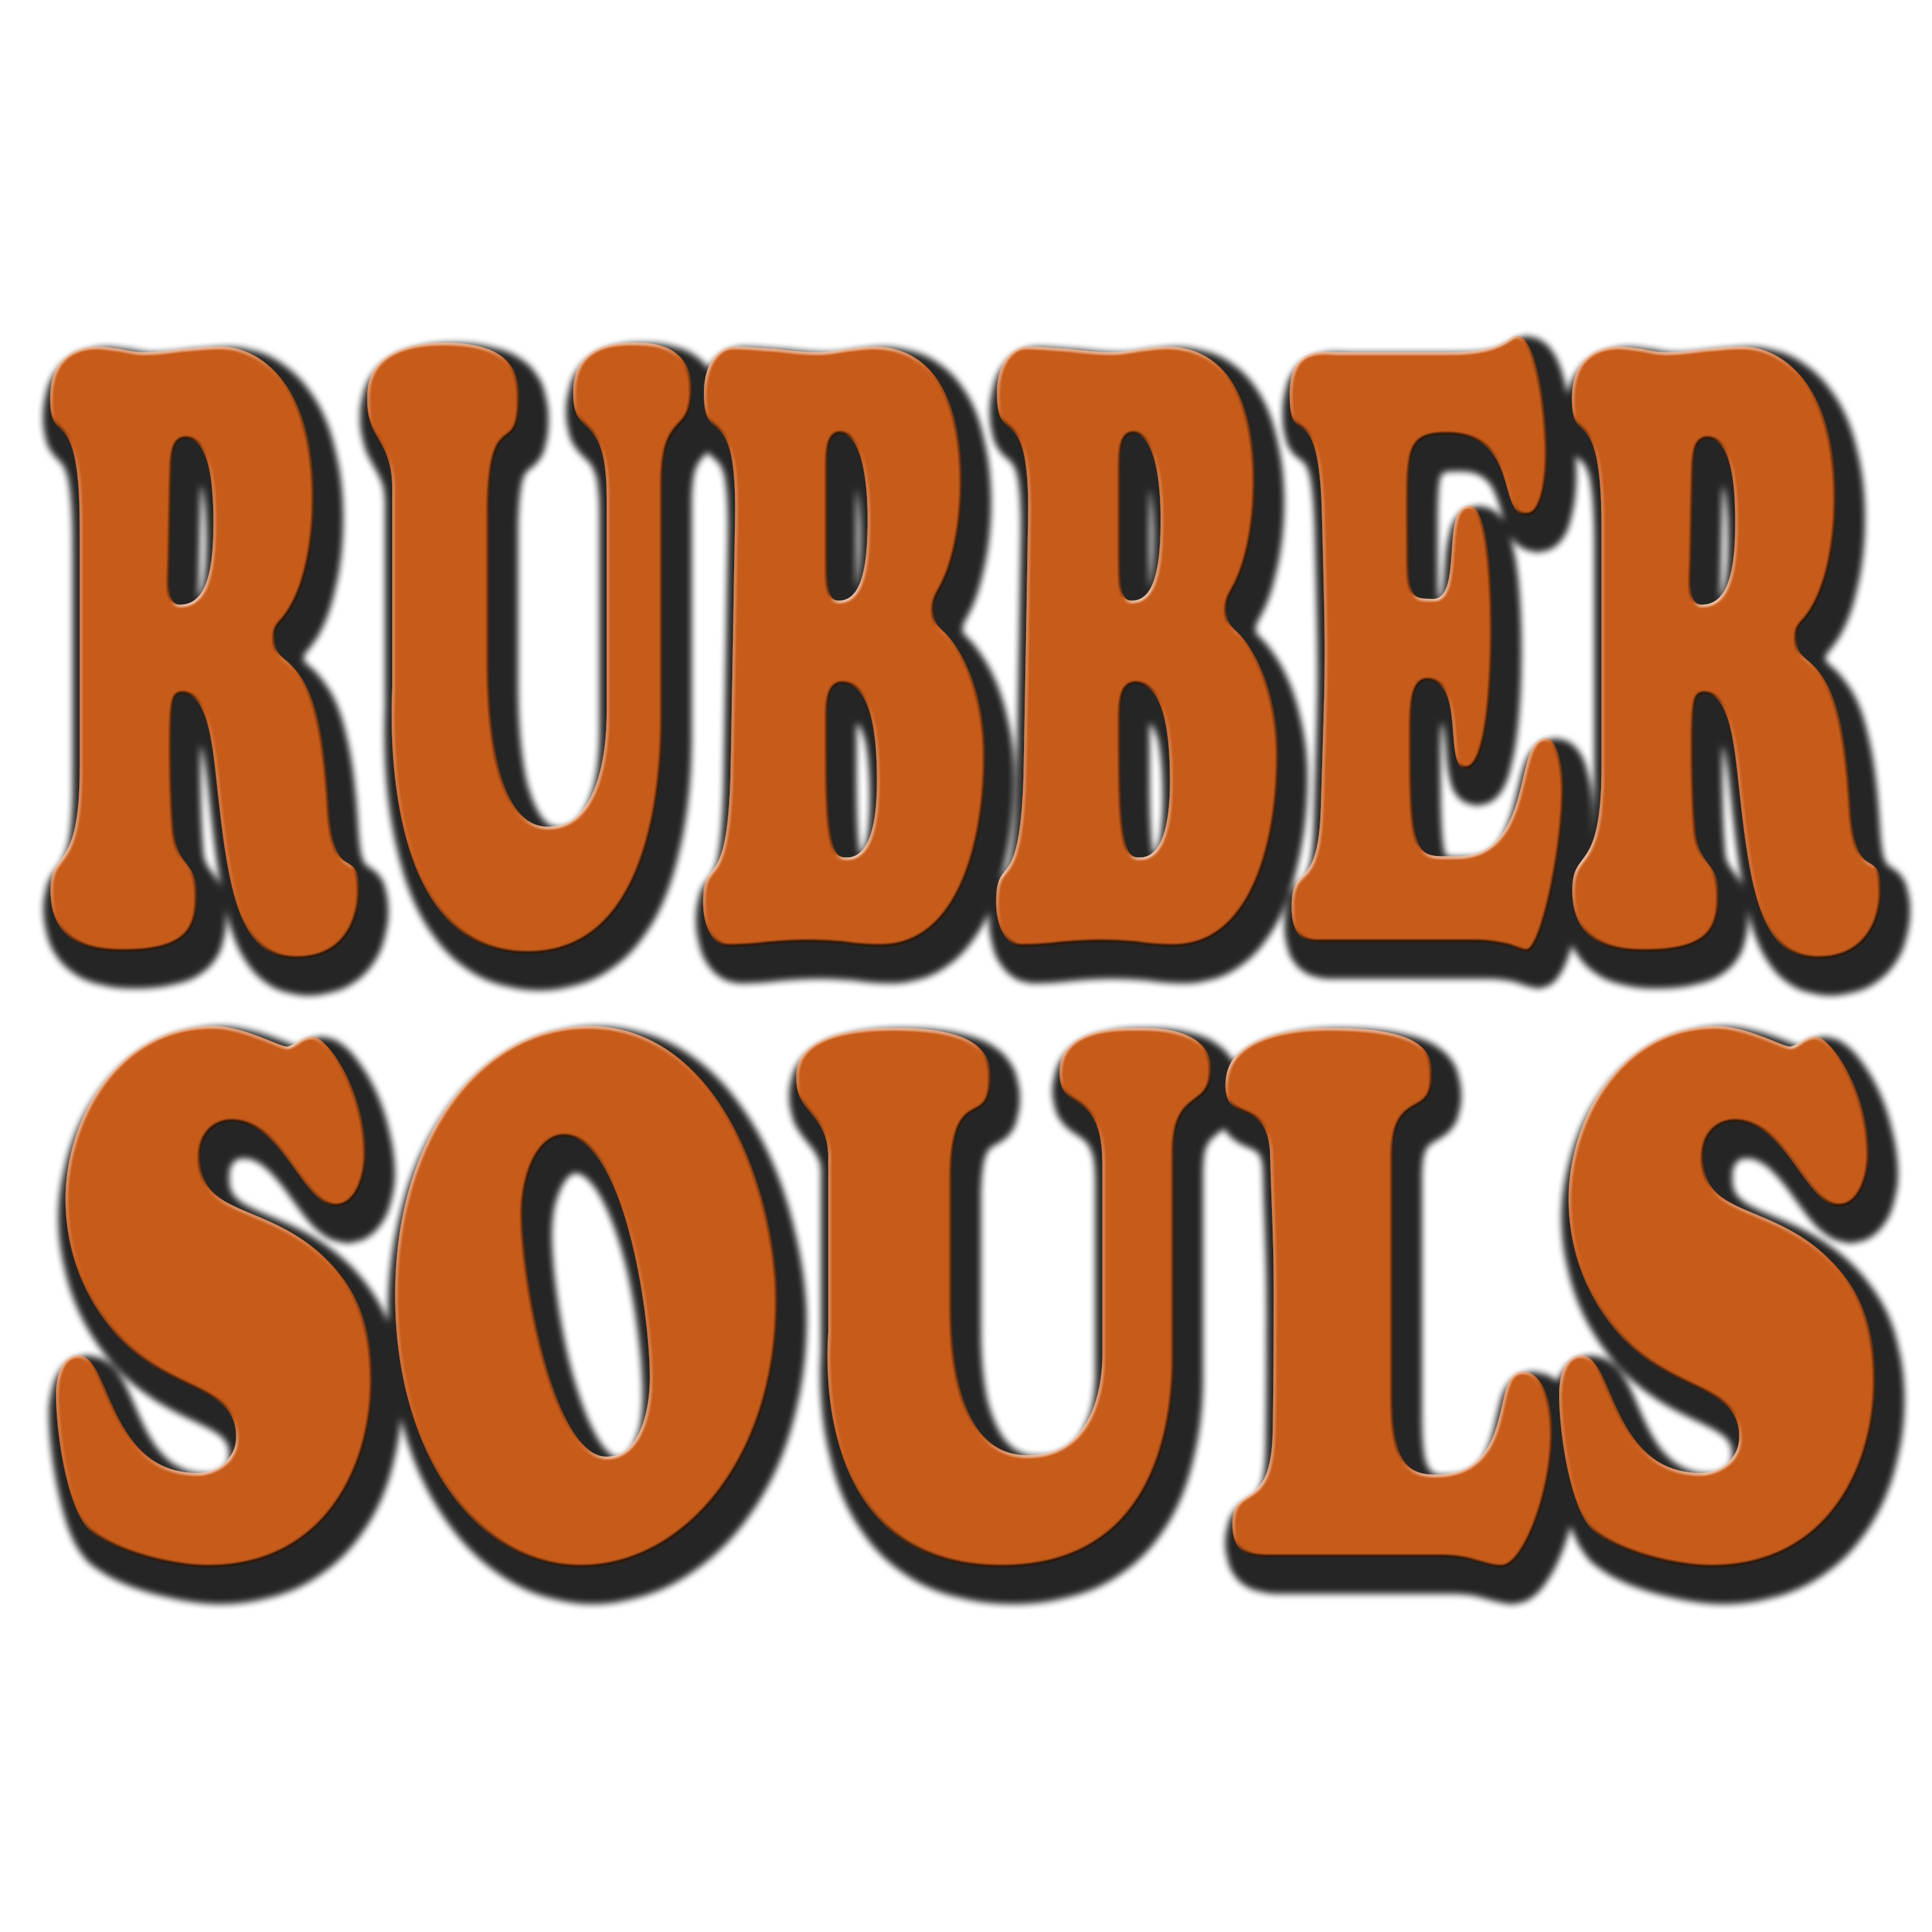 Rubber Souls